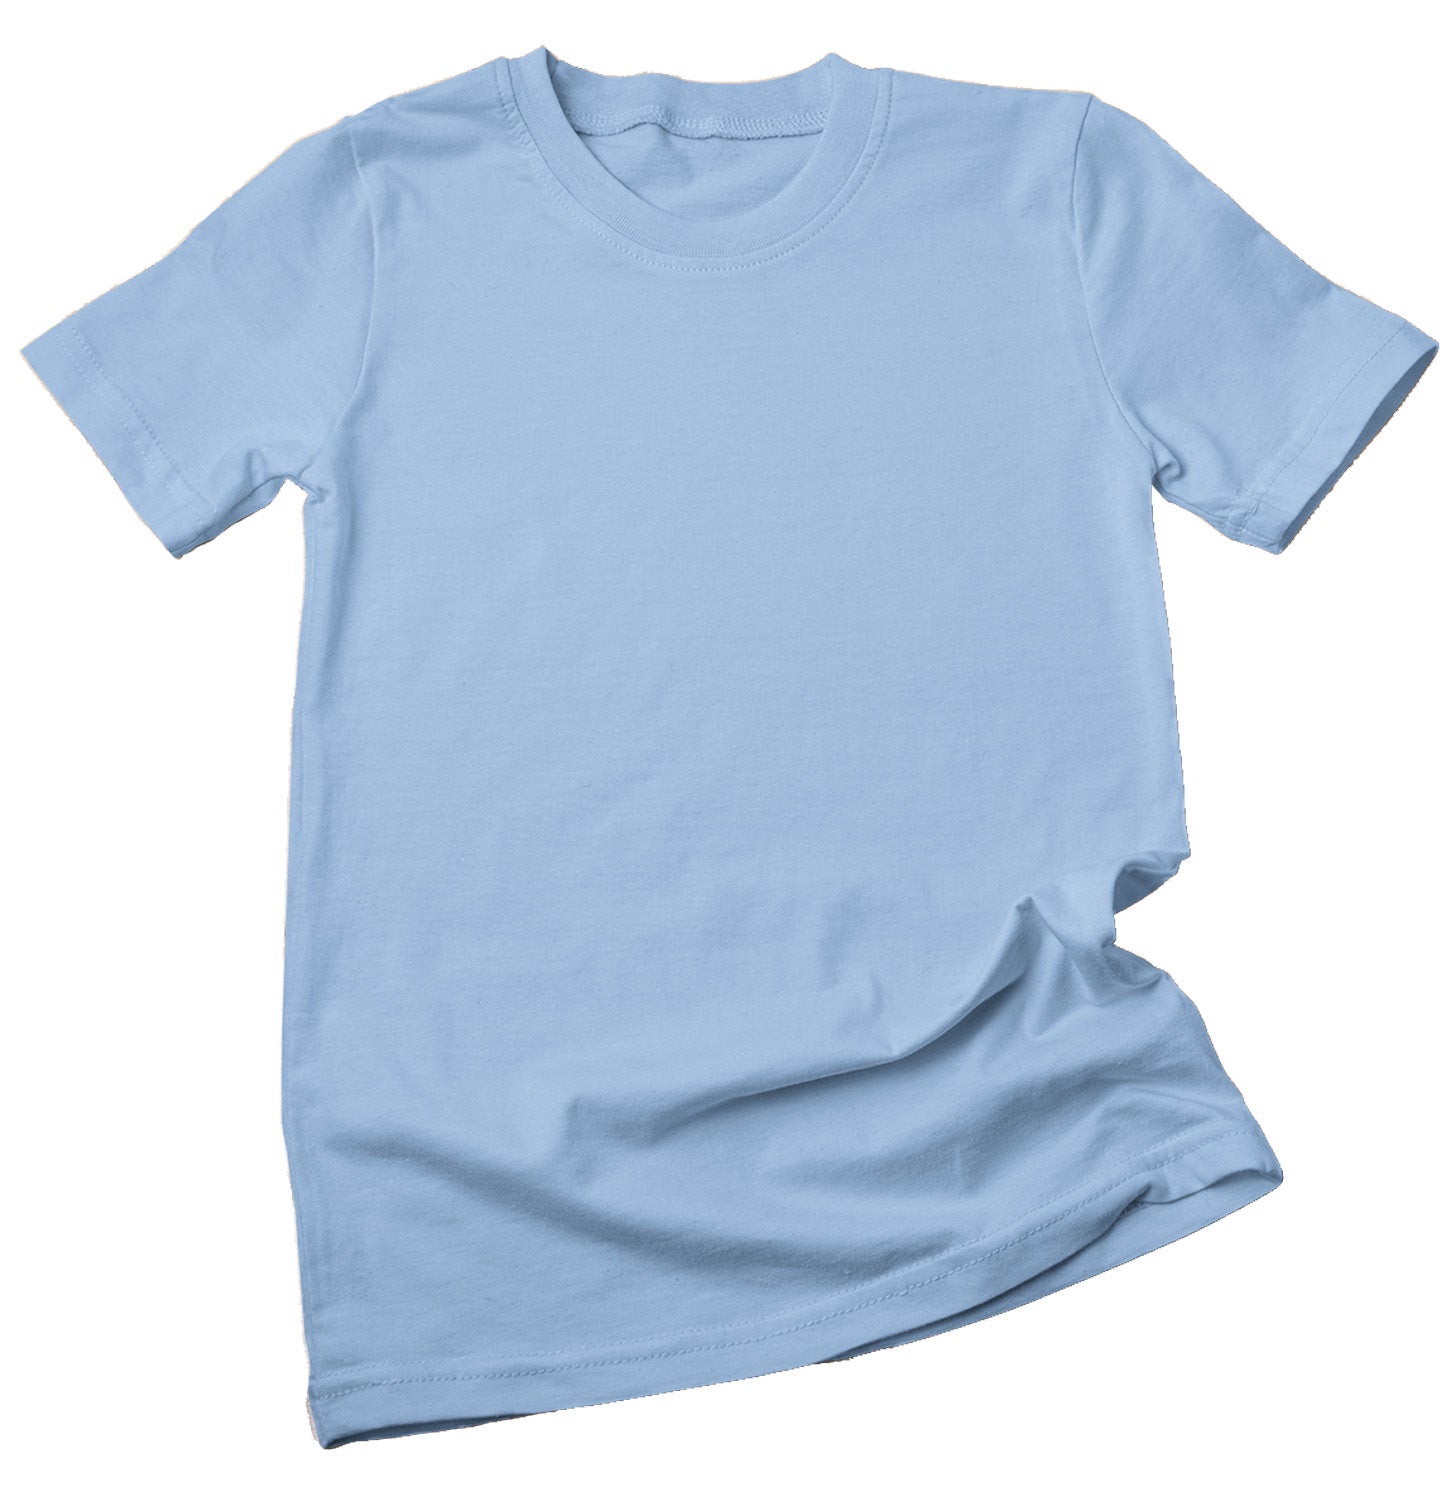 My Dachshund Is My Valentine - Personalized Custom Adult Unisex T-Shirt